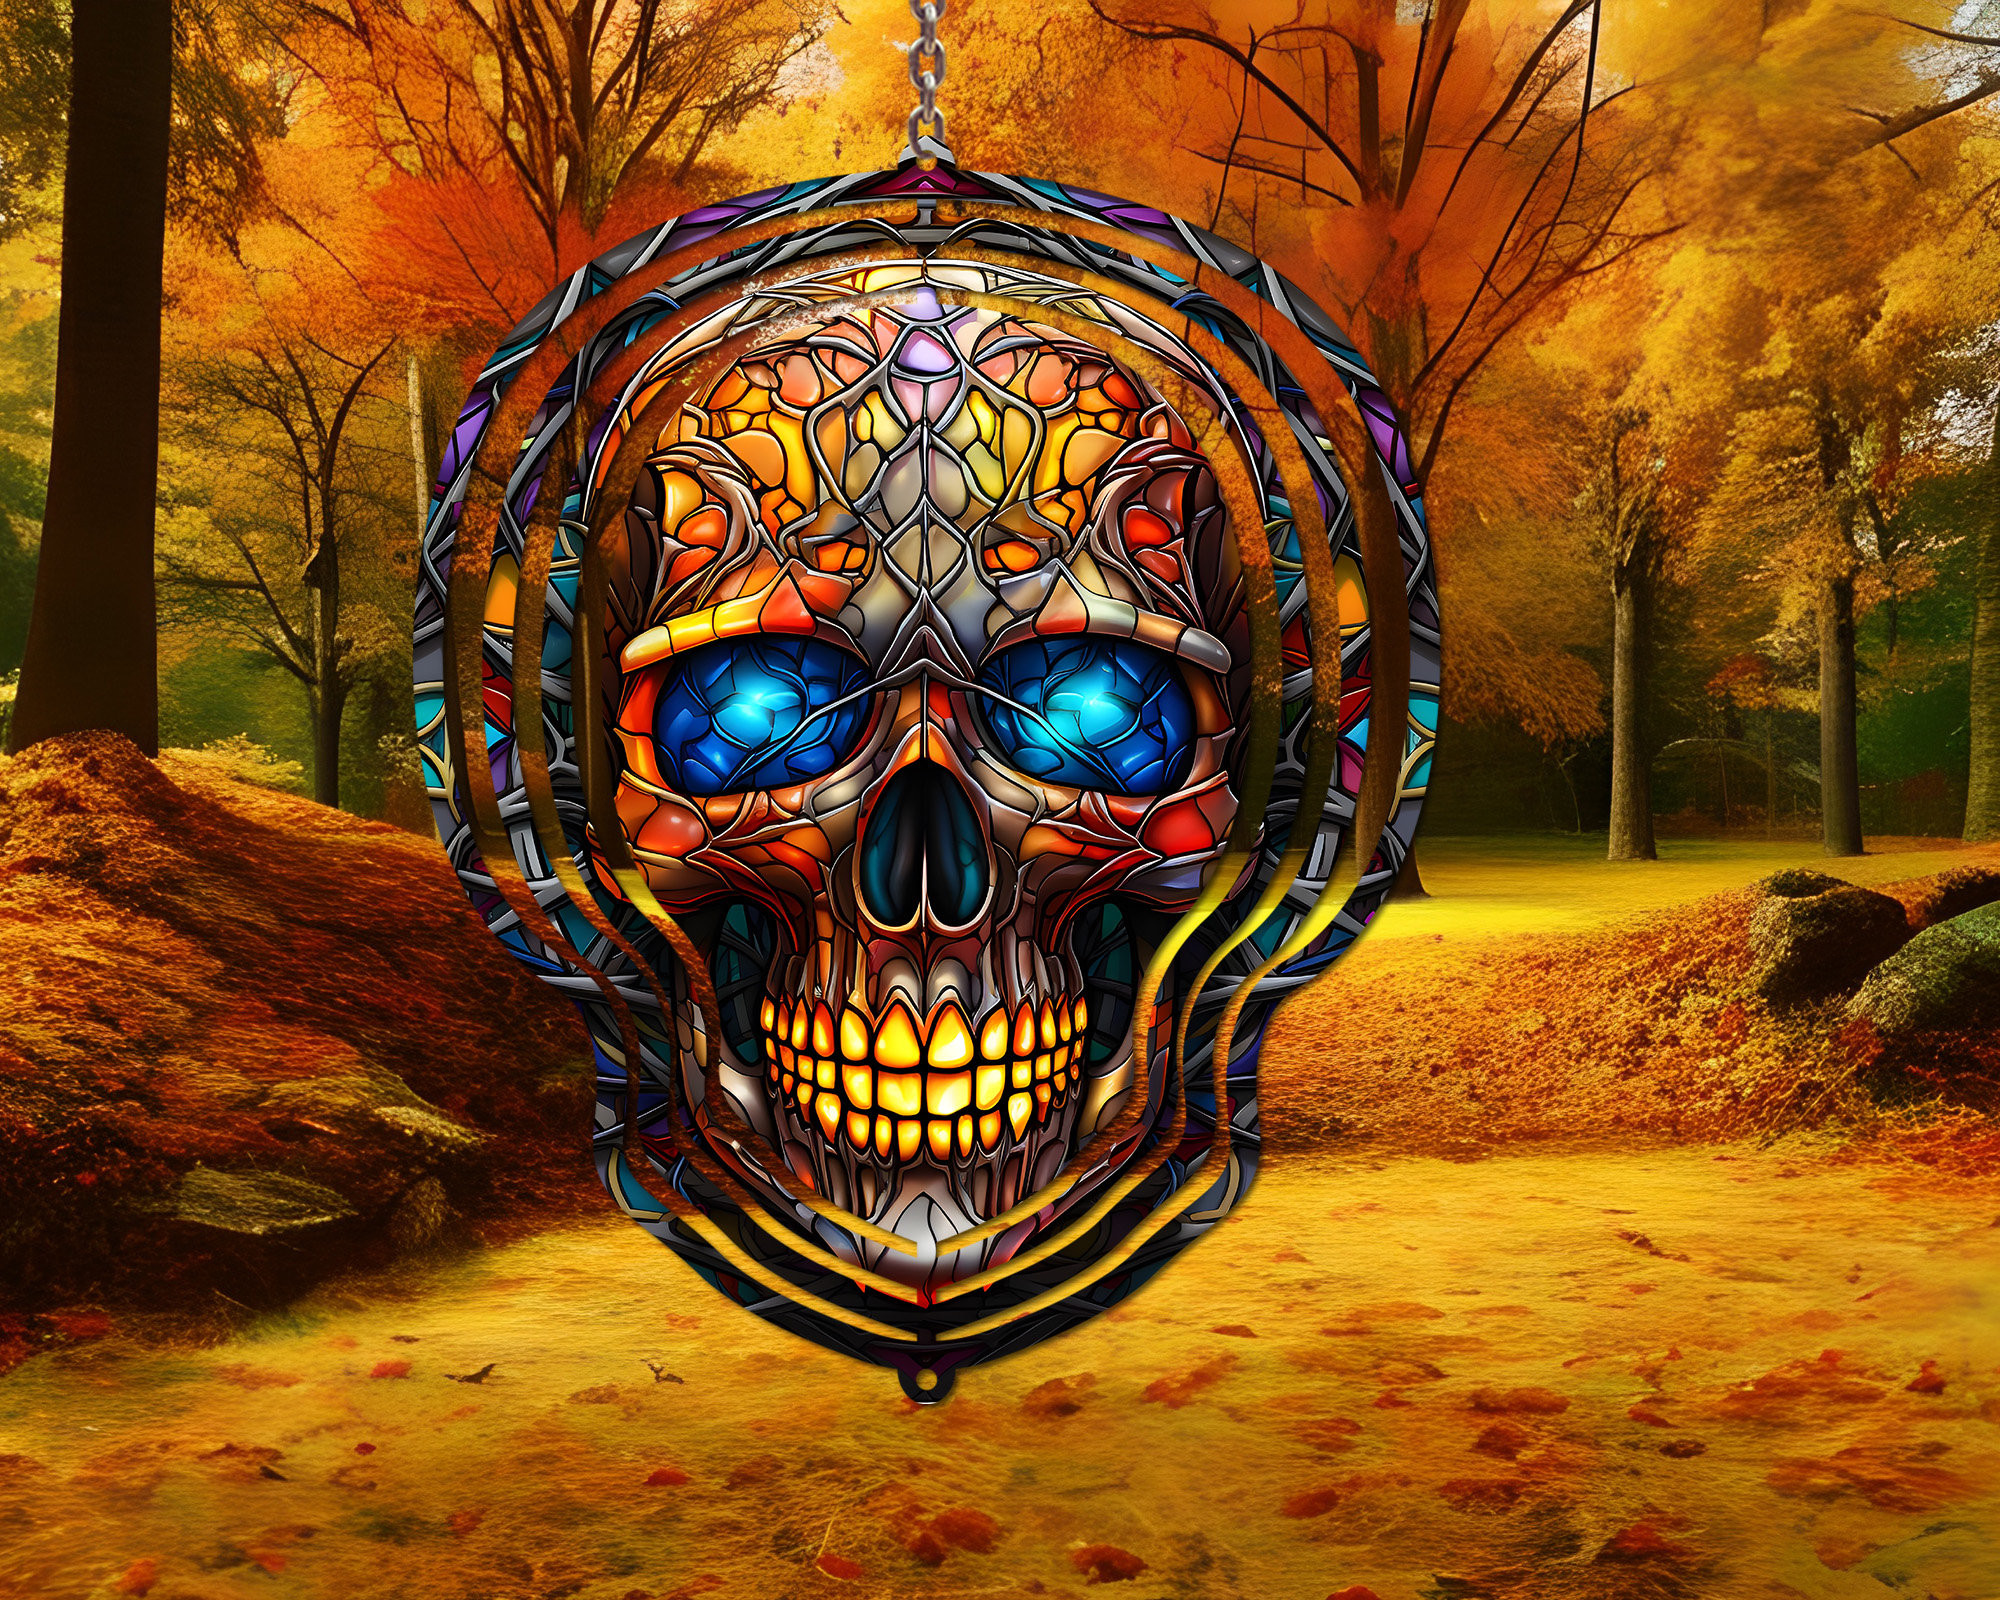 Halloween Skull Wind Spinner For Yard And Garden, Outdoor Garden Yard Decoration, Garden Decor, Chime Art Gift